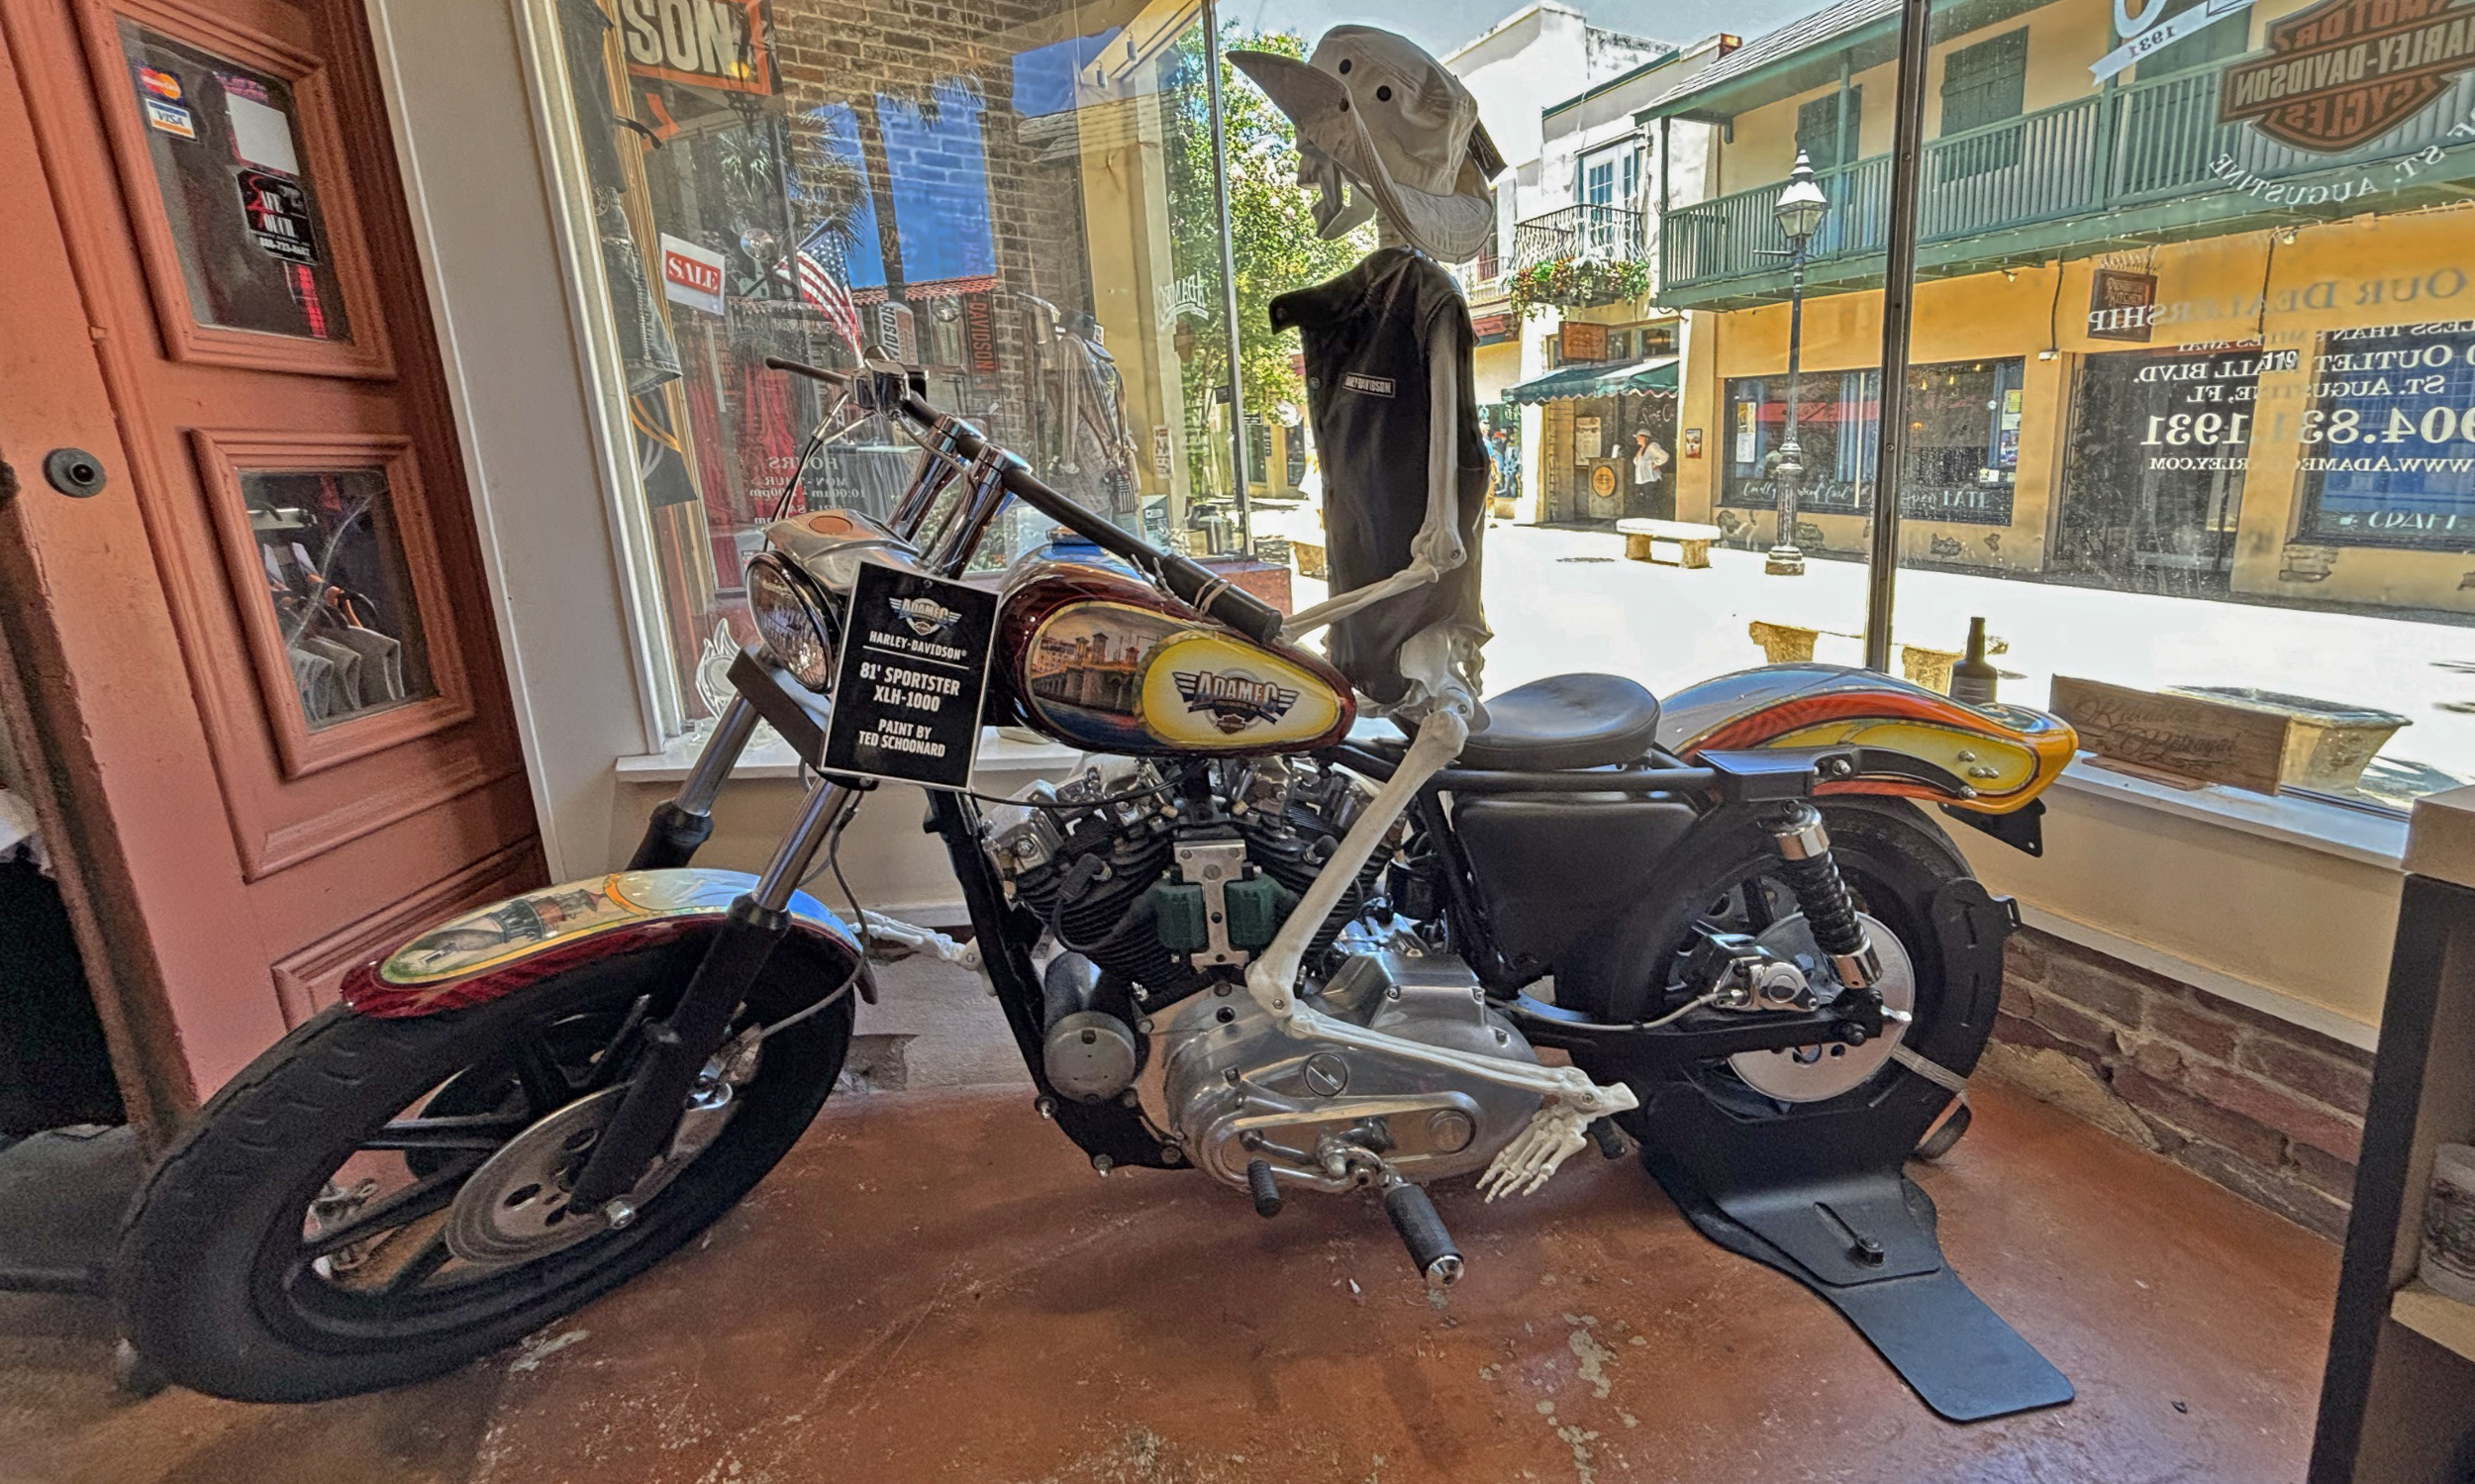 A special St. Augustine Adamec Harley-Davidson in a shop window